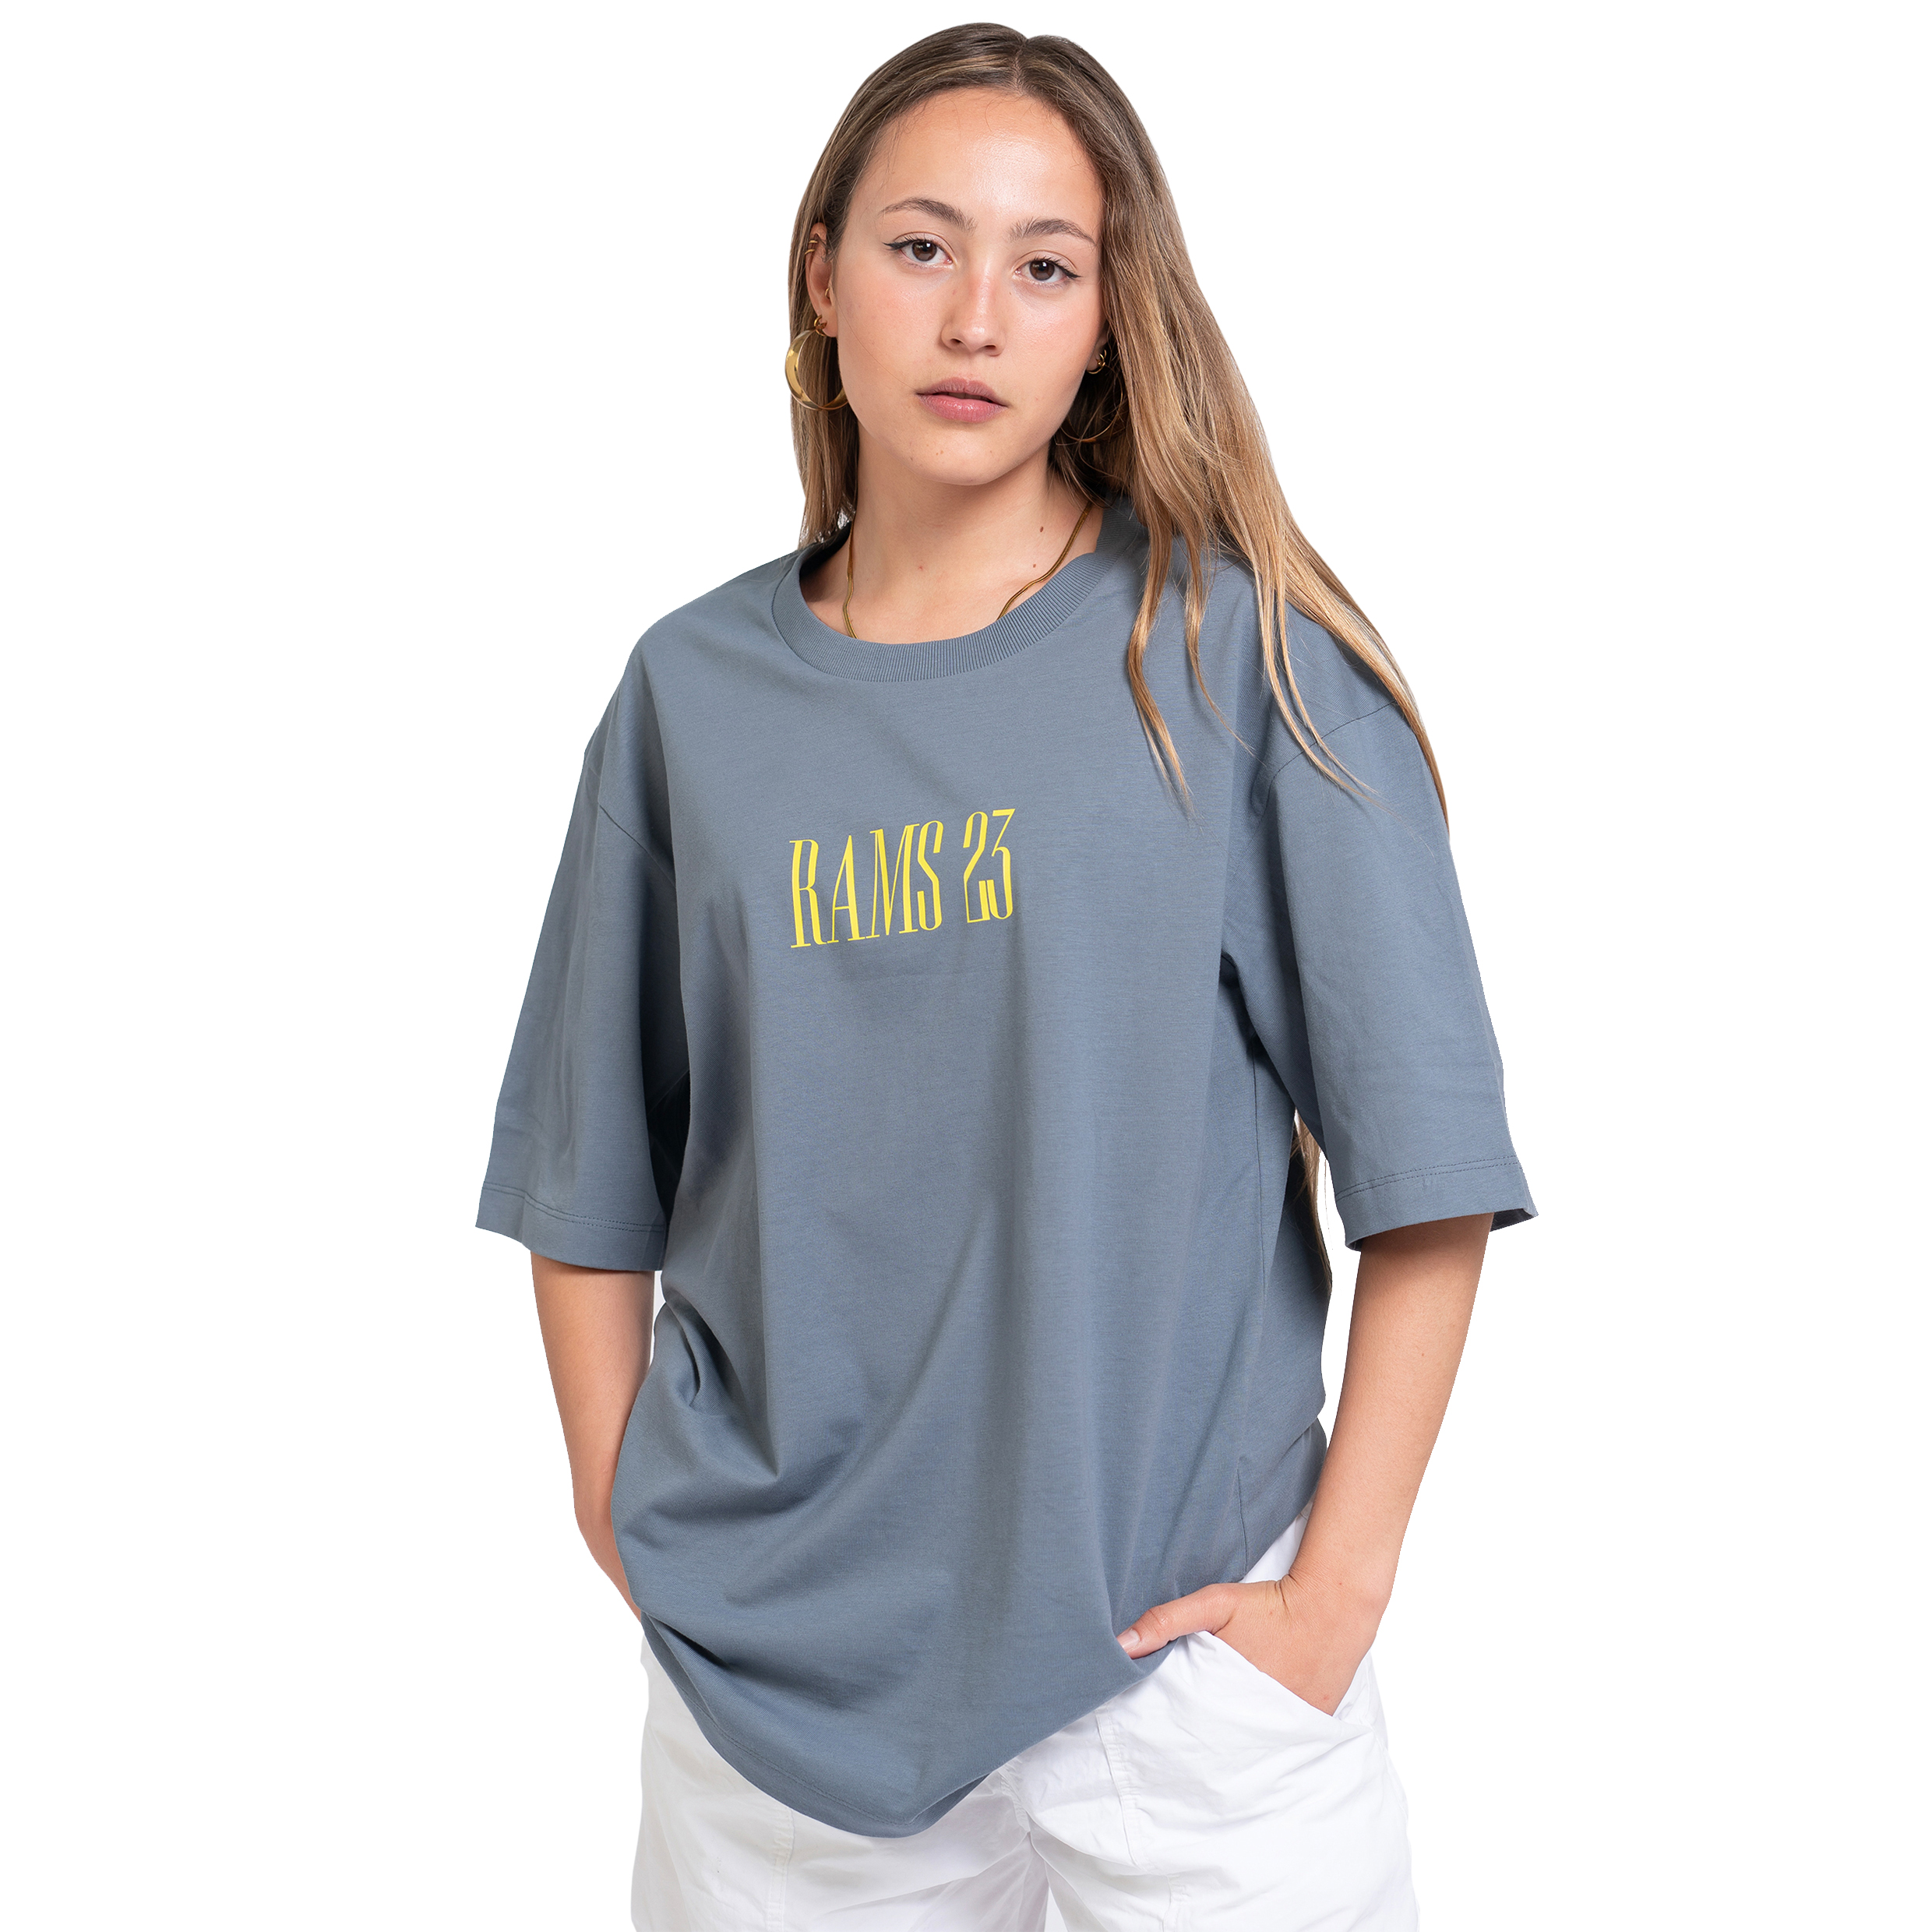 Camiseta Oversize Rams 23 News - azul - 